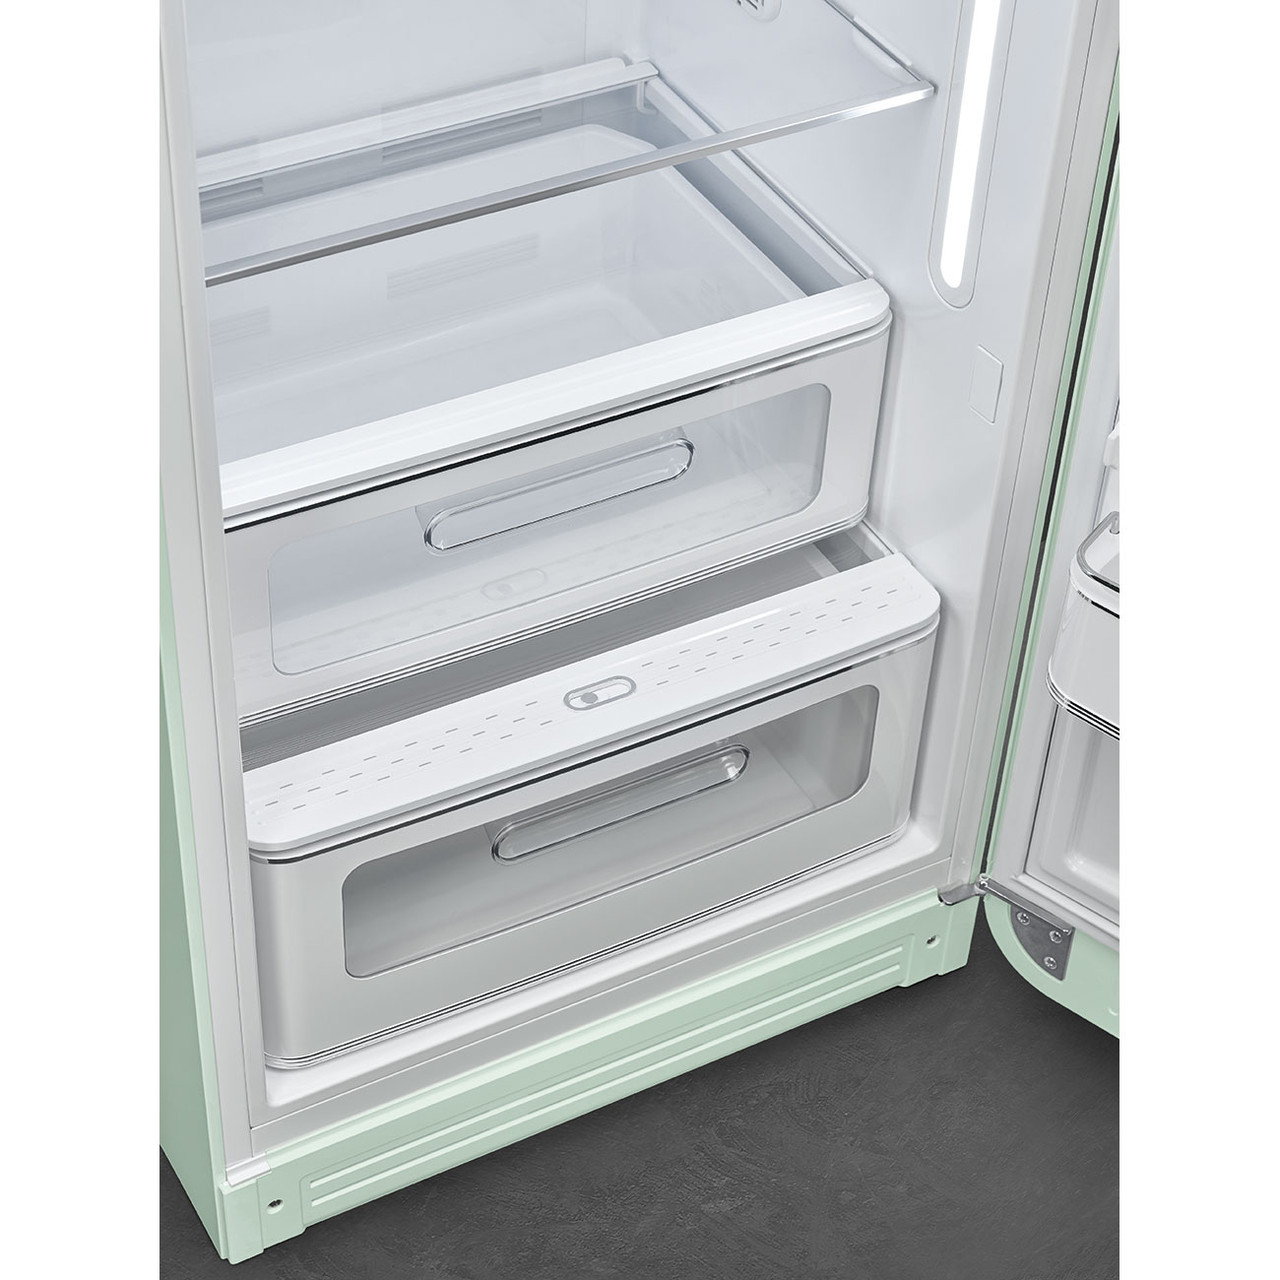 FAB28RPG3AU - 270L FAB28 50's Style Retro Refrigerator - Palstel Green, Right Hinge